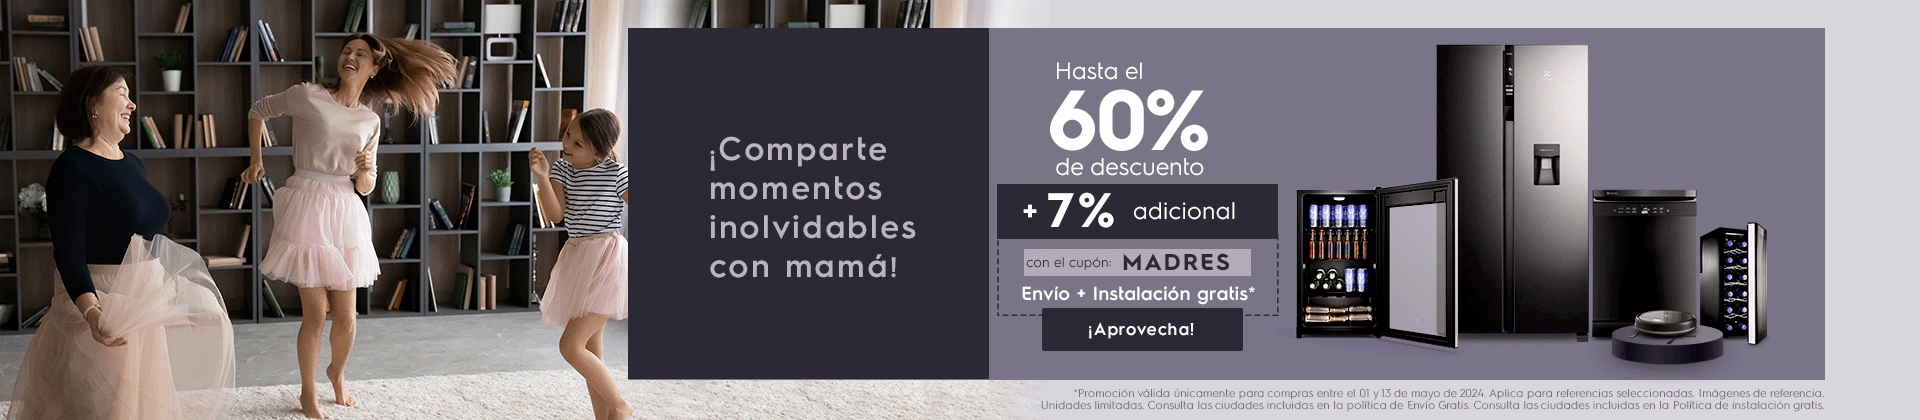 Comparte momentos inolvidables con mamá - Electrolux hasta 60% de edscuento + Envío + Instalación Gratis*